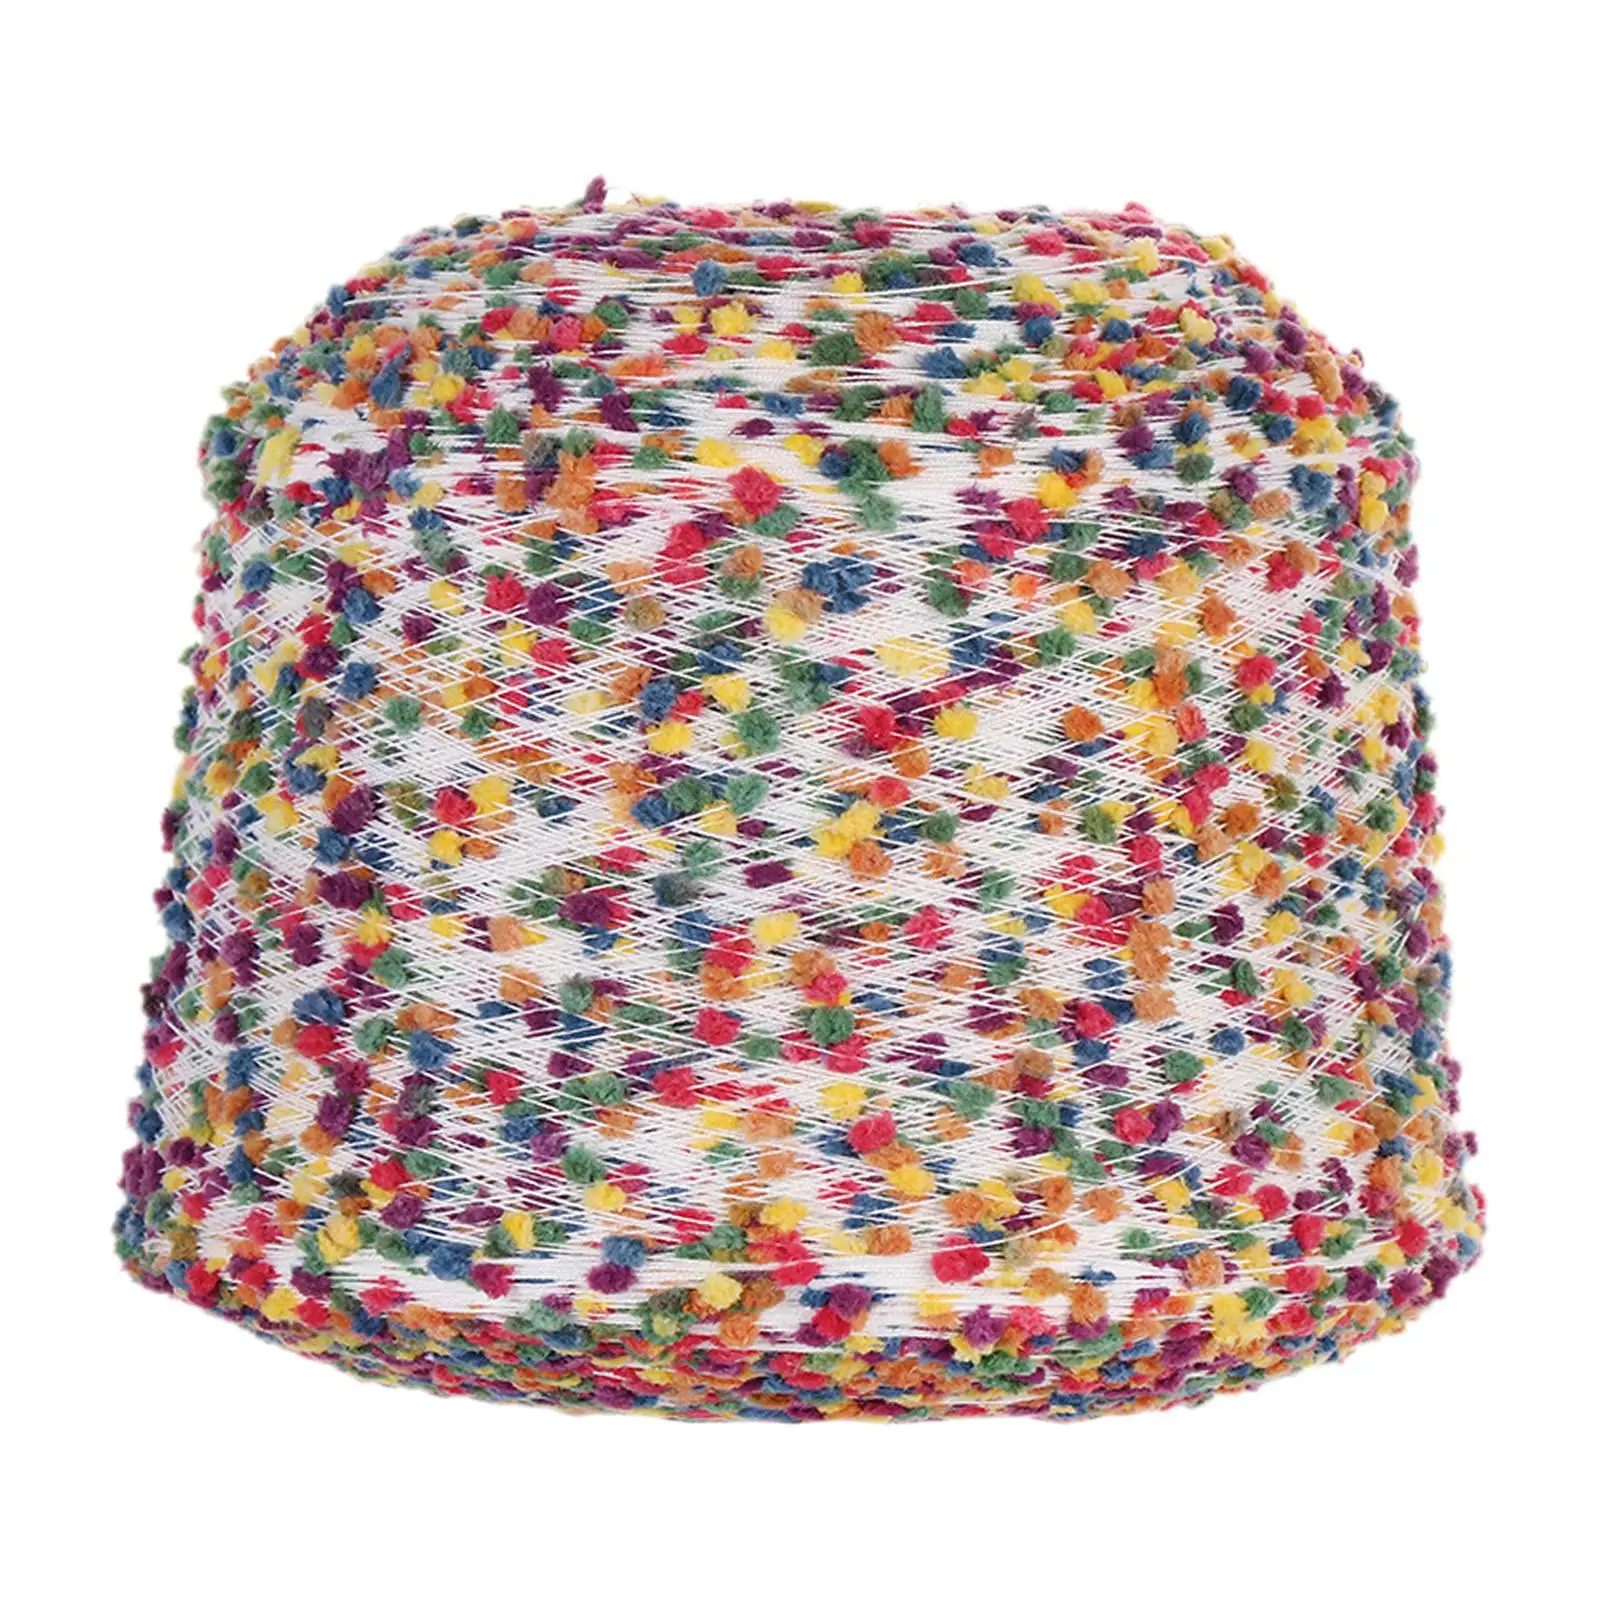 Knitting Yarn DIY Premium Crafts Lightweight Hand Knit Crocheting Making Weaving Yarn for Scarf Clothing Bag Sweater Accessories